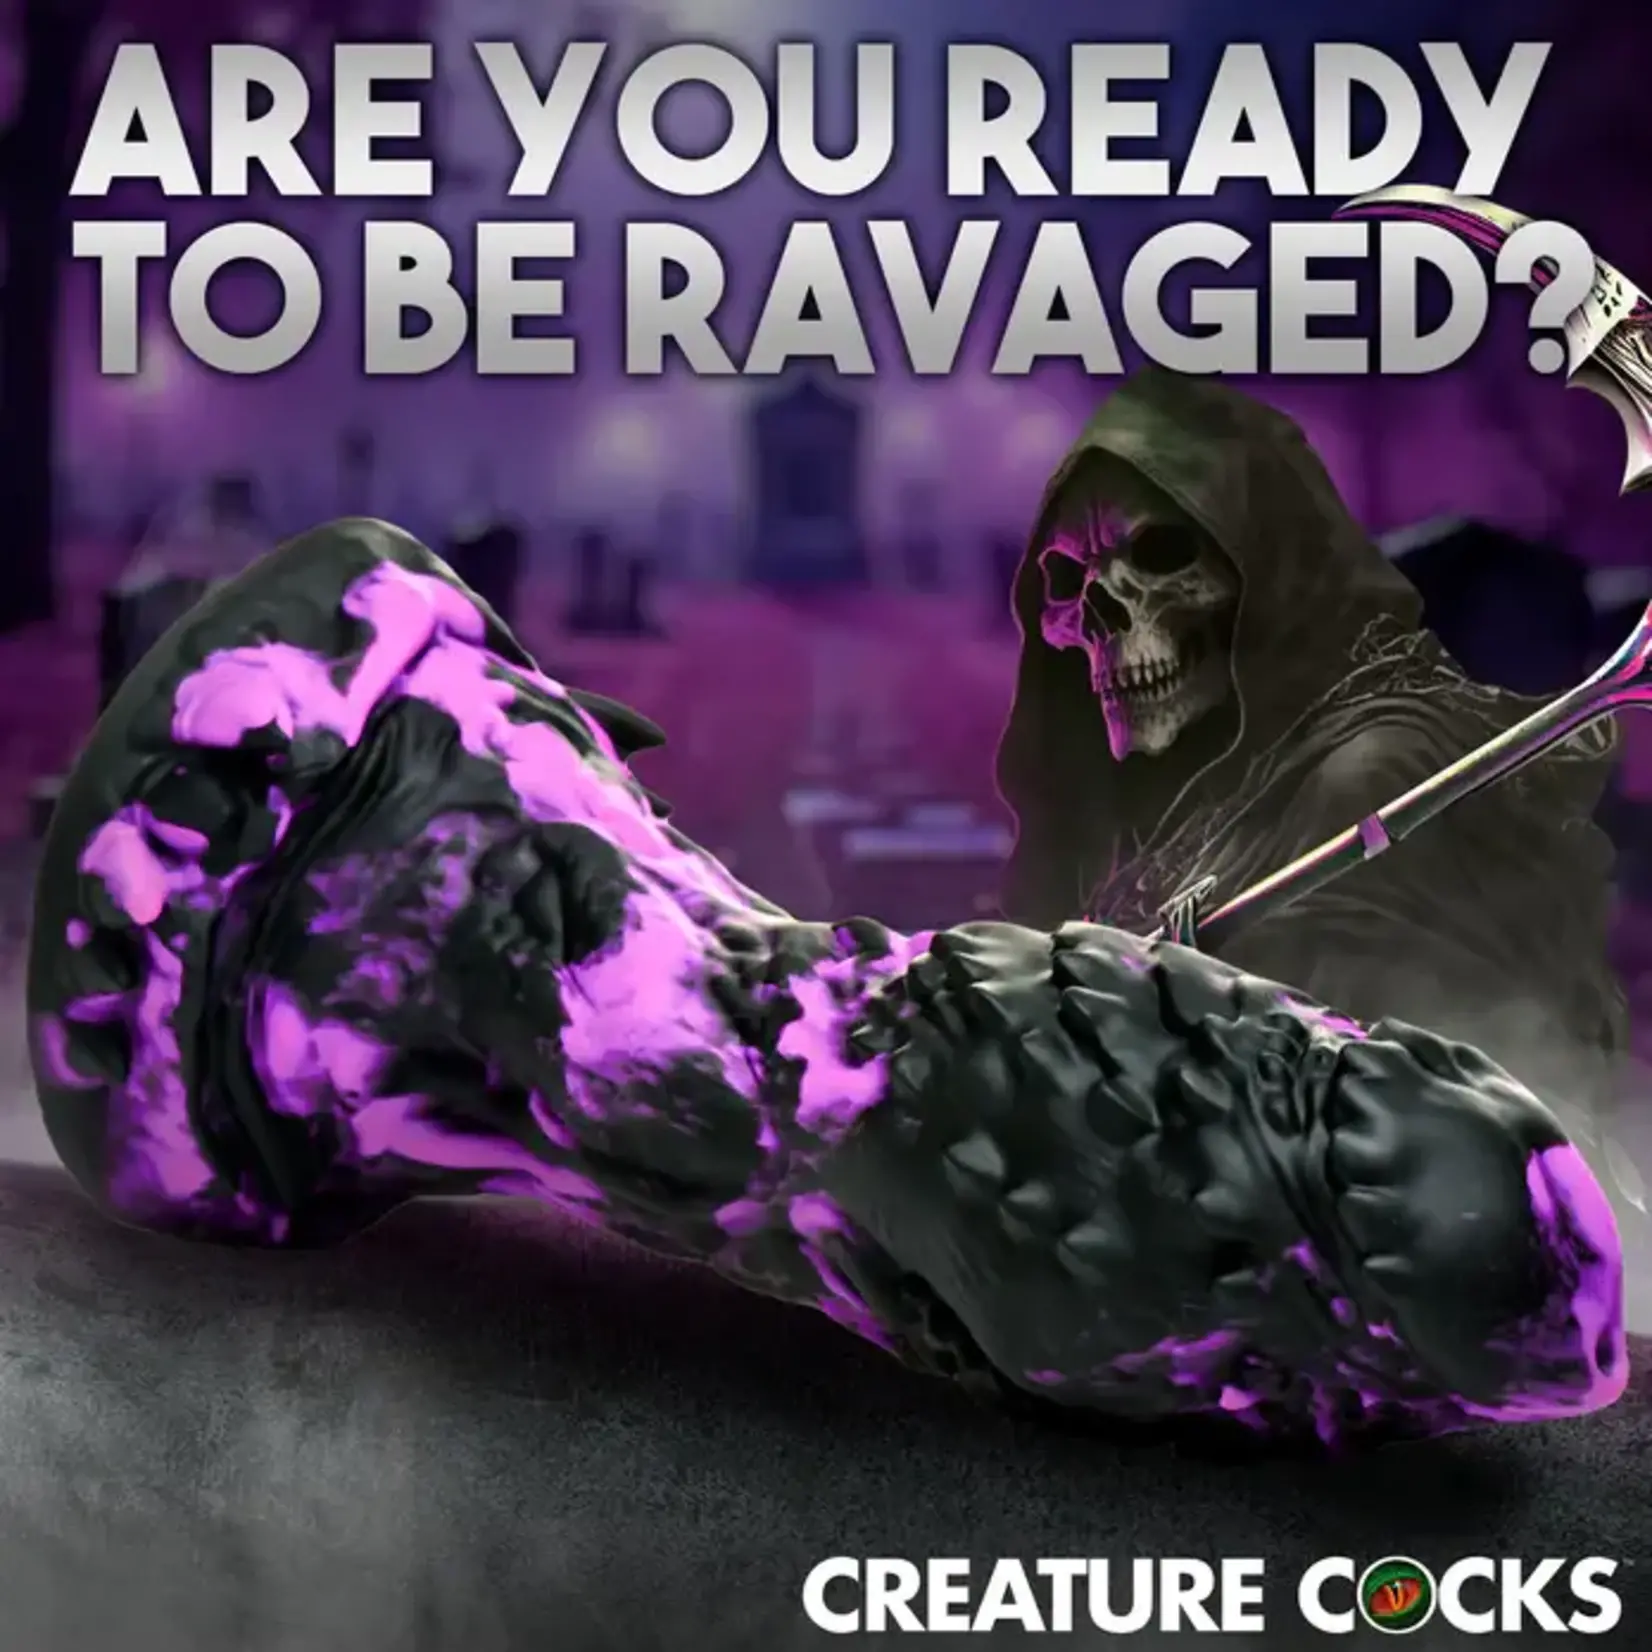 Creature Cocks Grim Silicone Dildo - Purple/Black